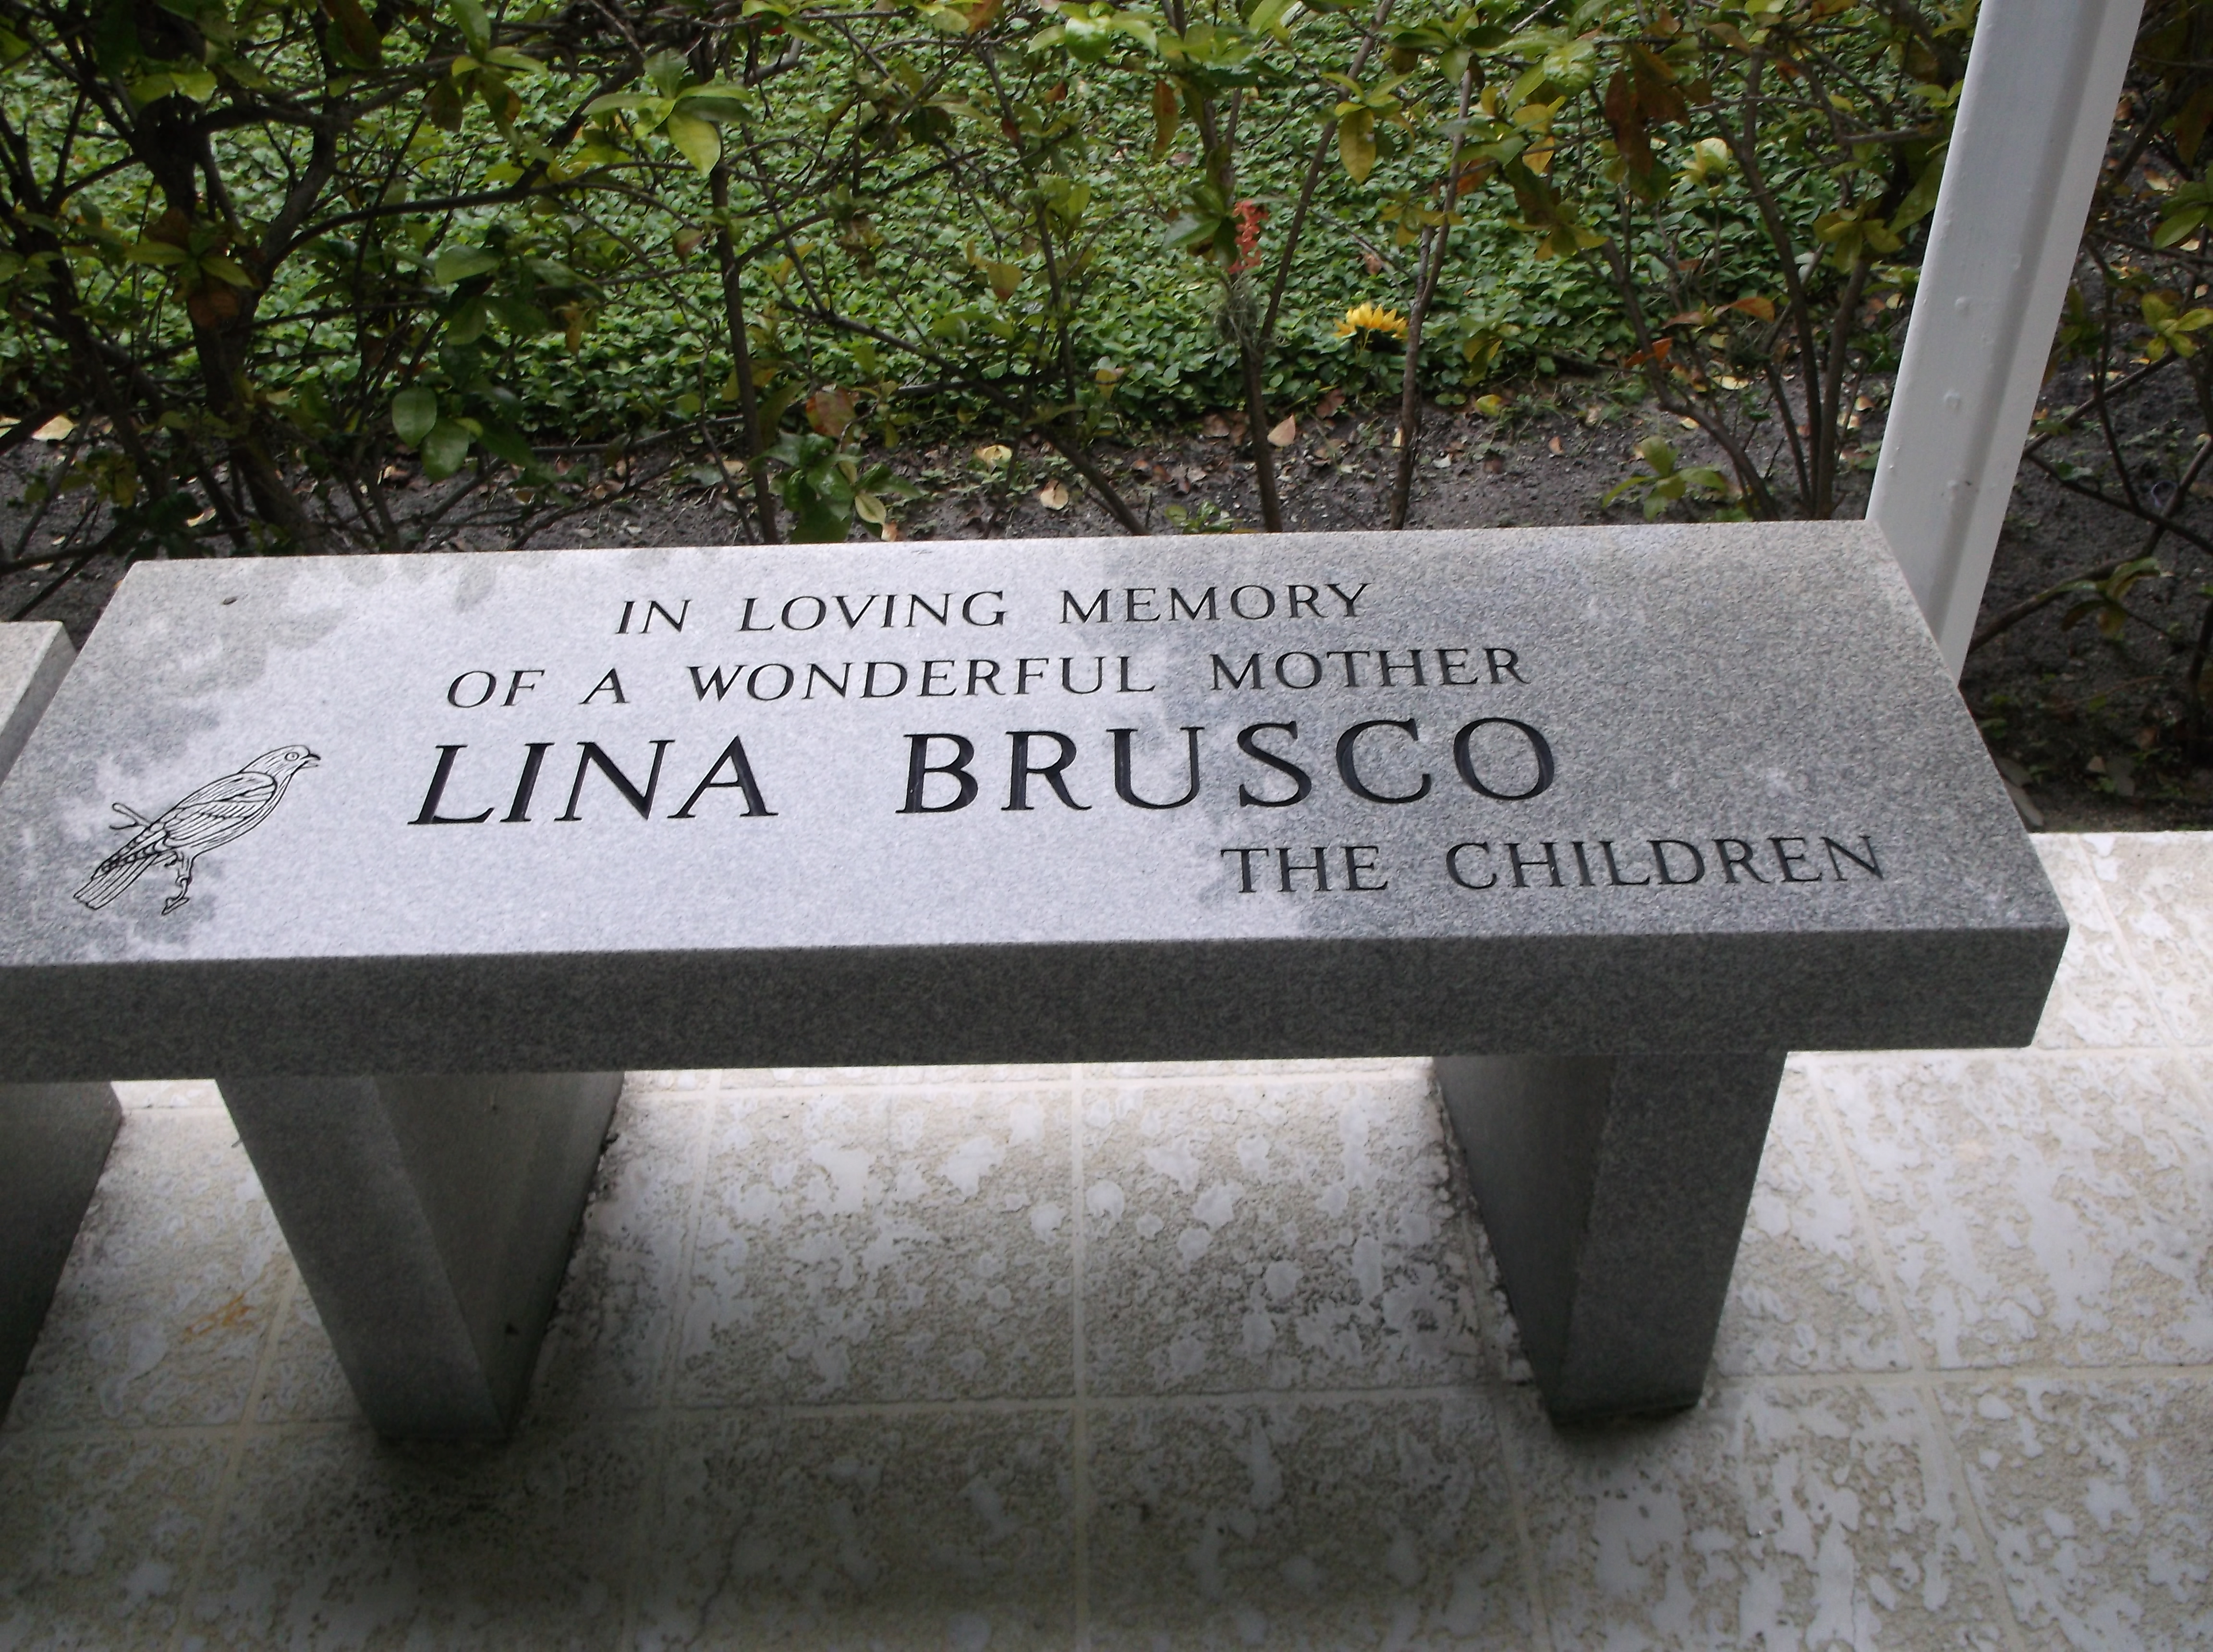 Lina Brusco